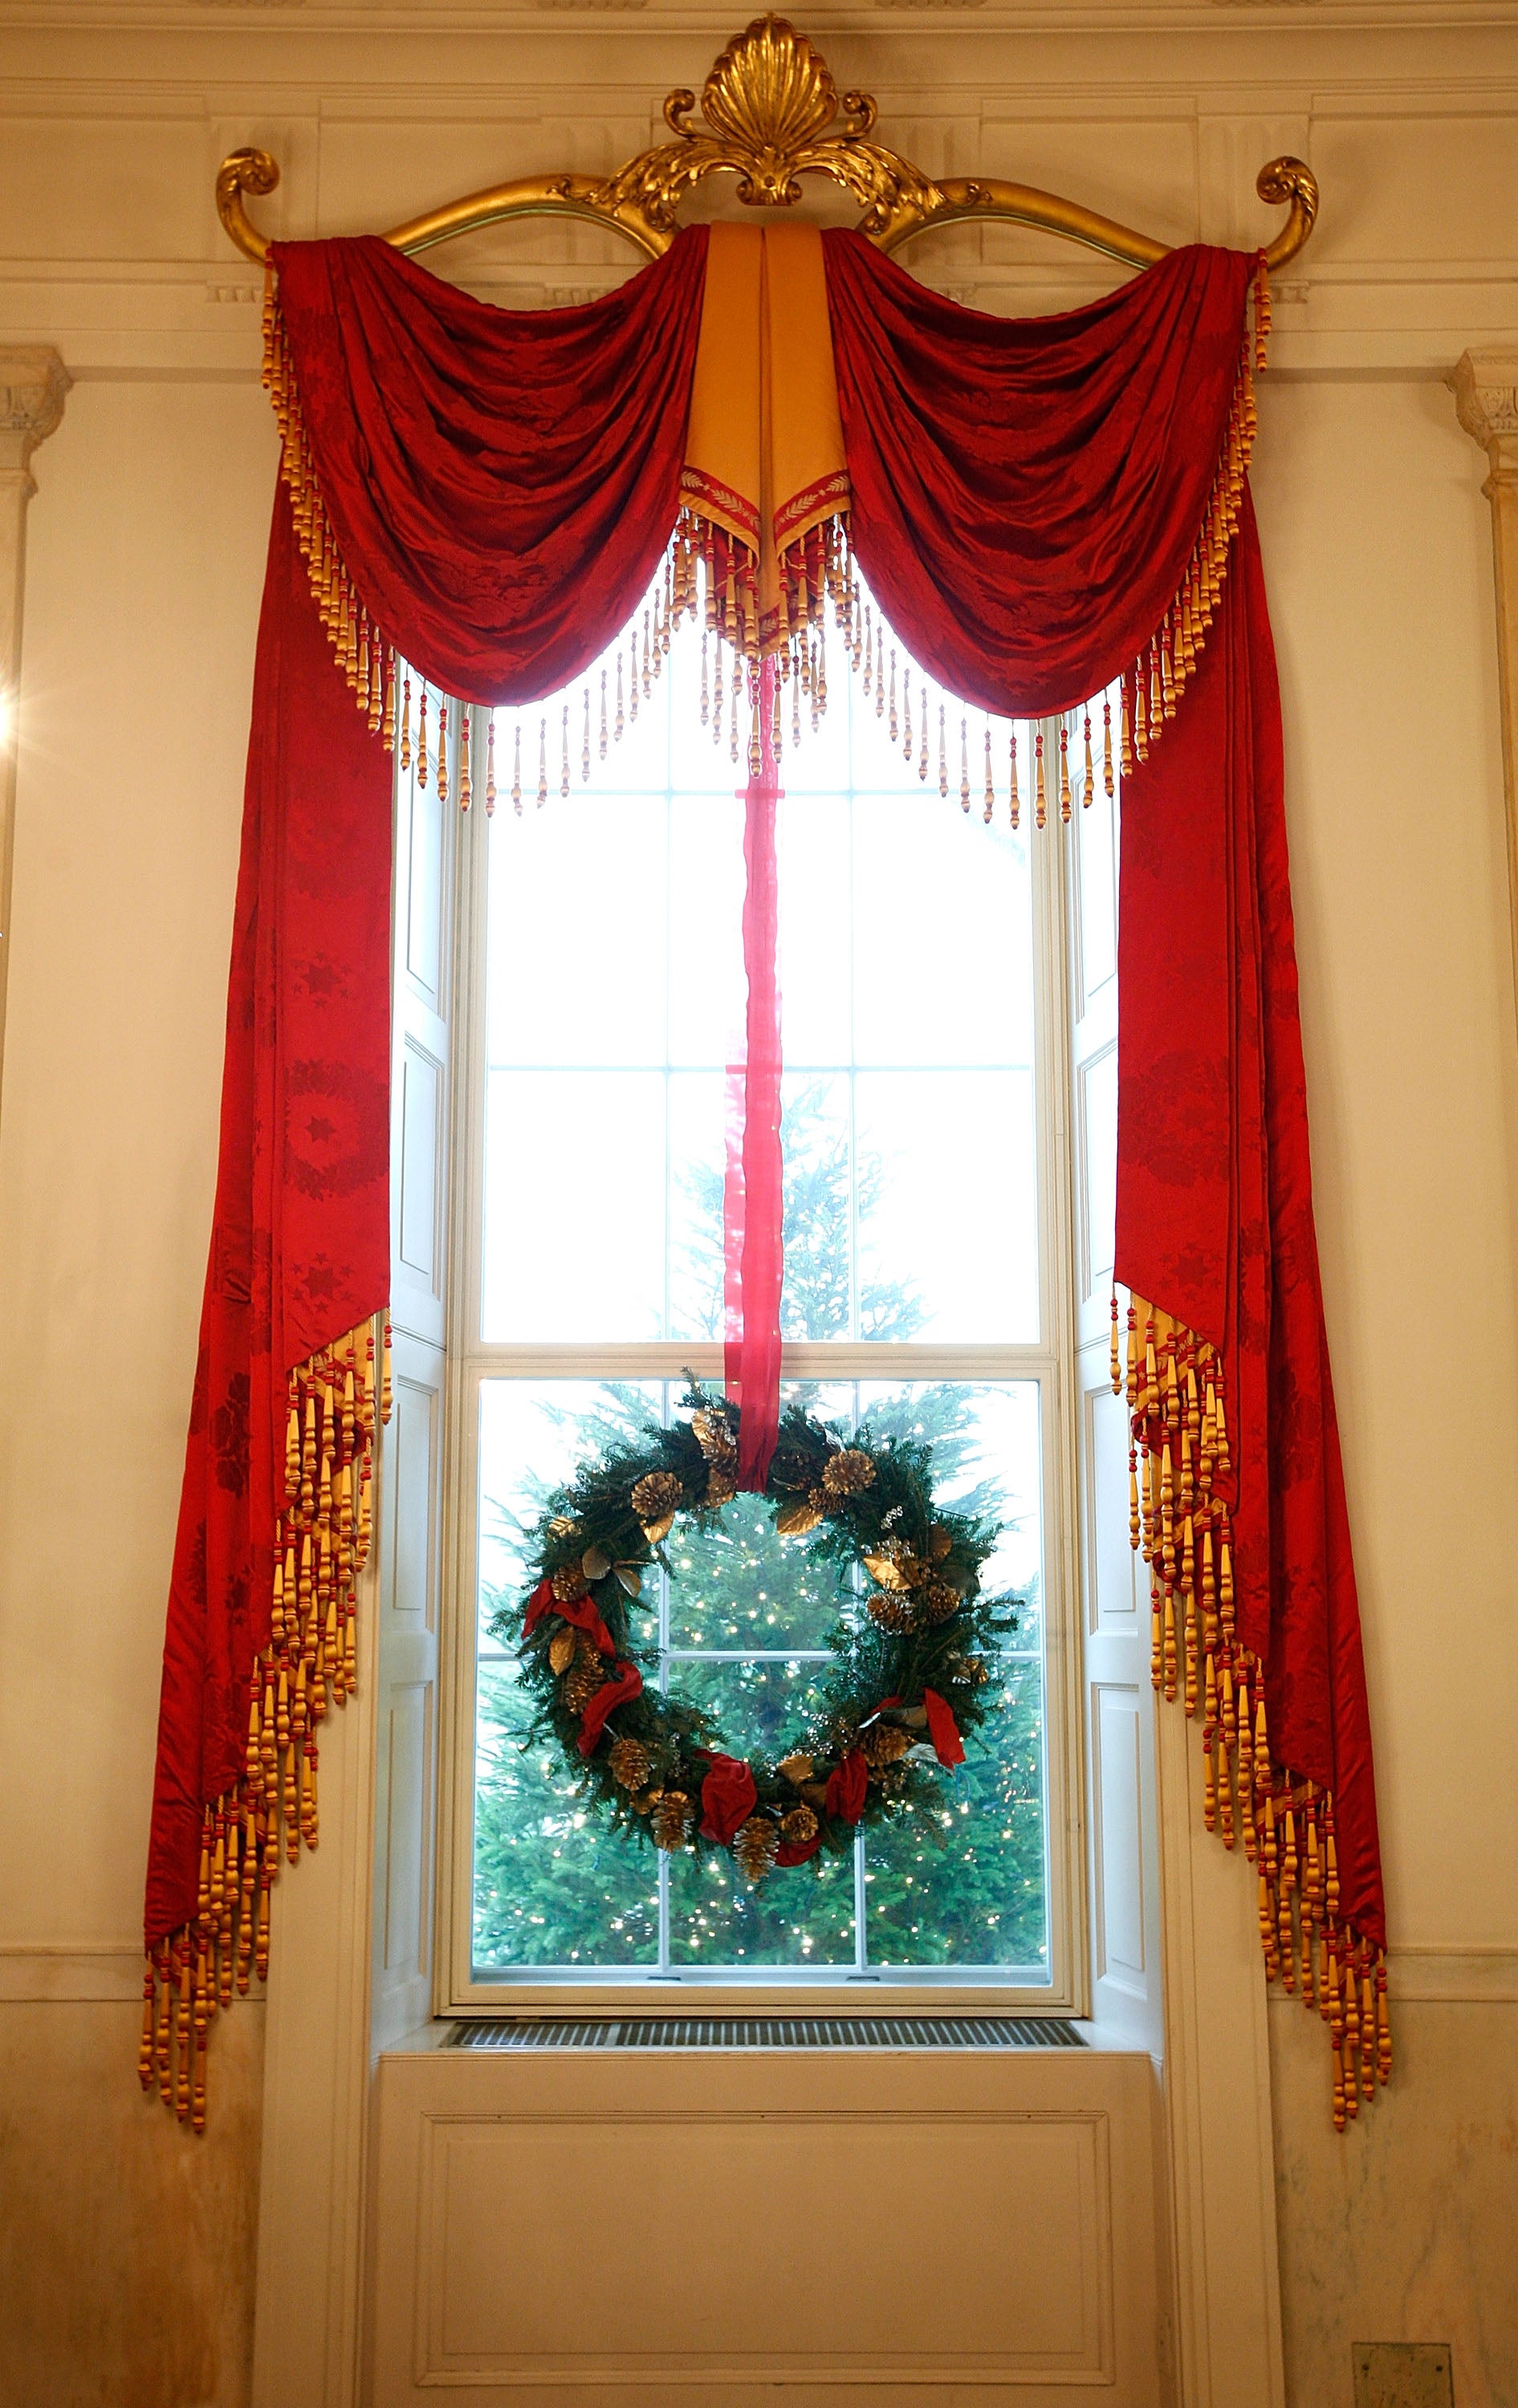 Michelle Obama Reveals White House Holiday Decor
